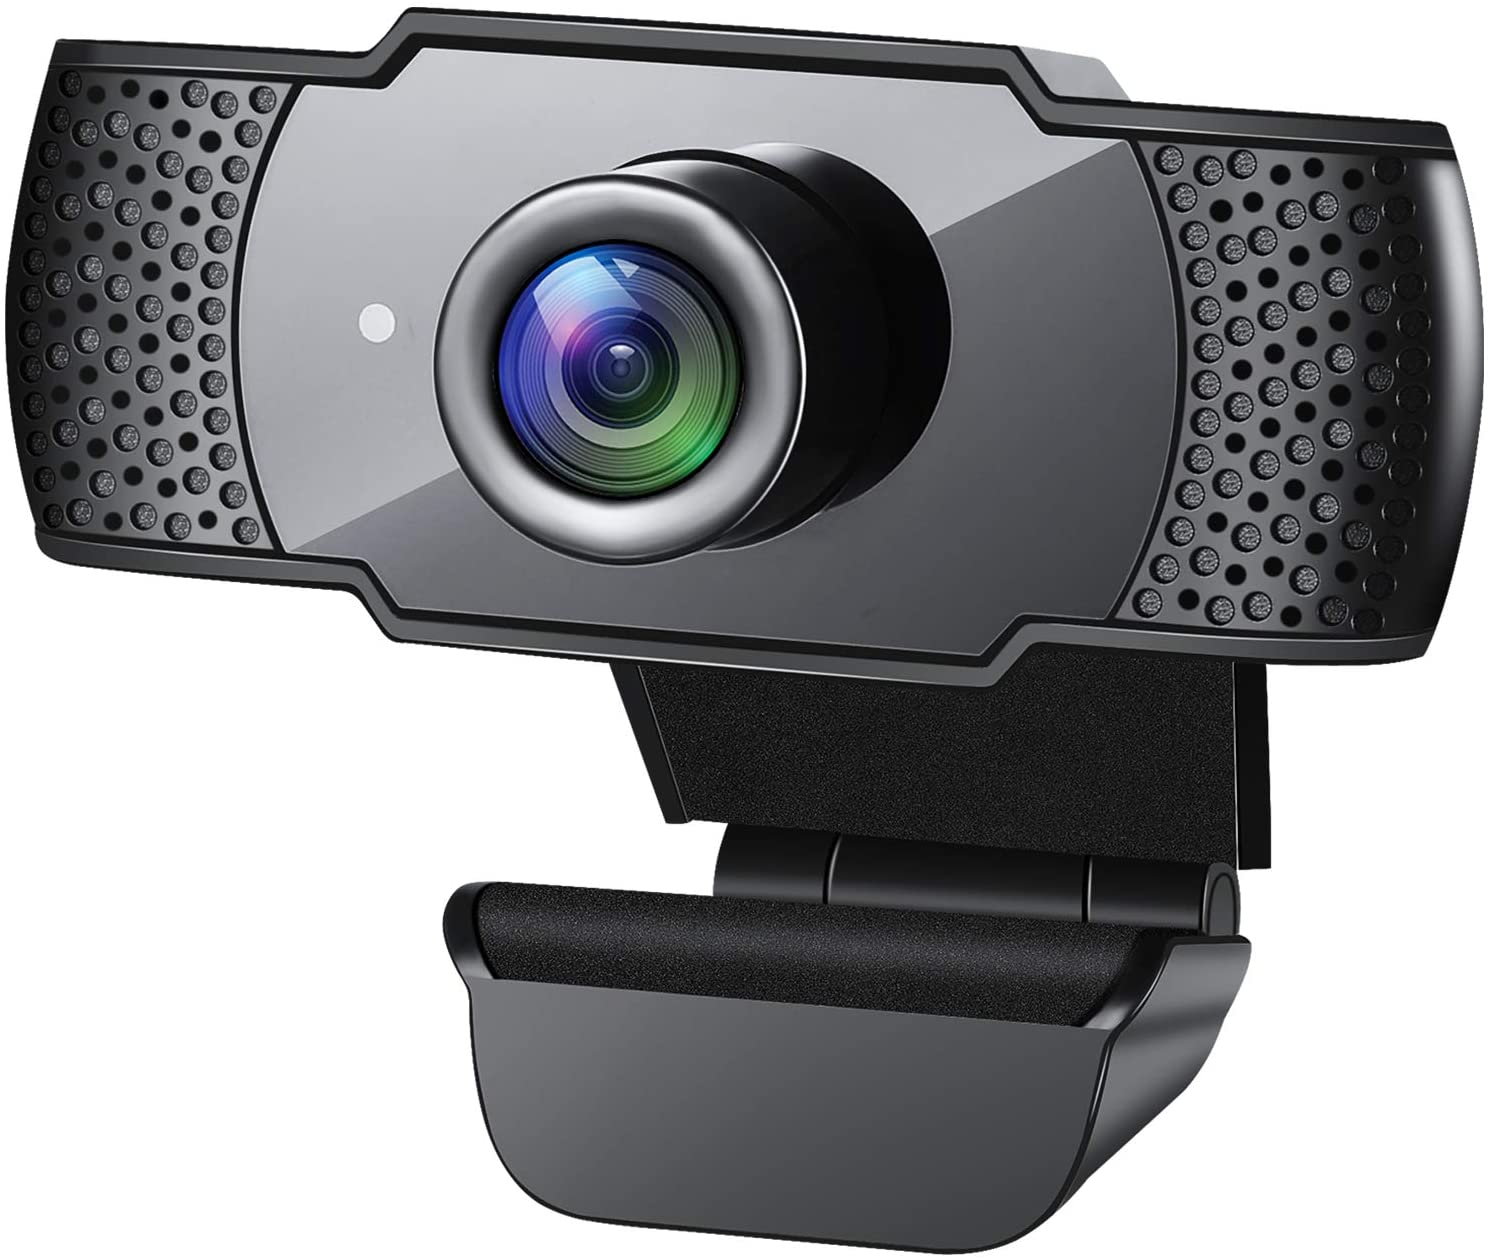 GESMA Webcam with Microphone